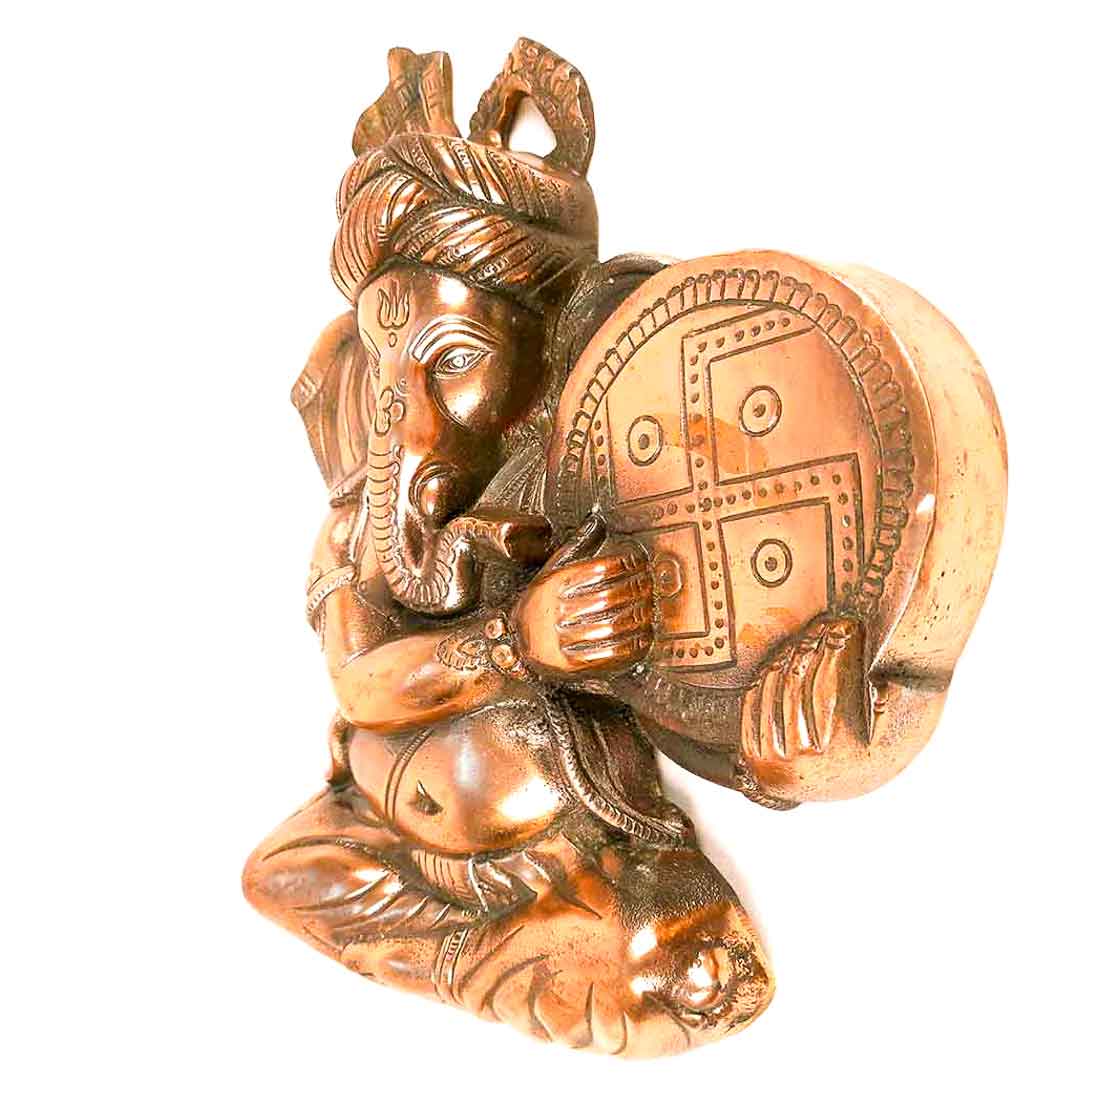 Ganesh ji Wall Hanging - Lord Ganesha Playing Dhapli Showpiece -14 Inch - ApkaMart